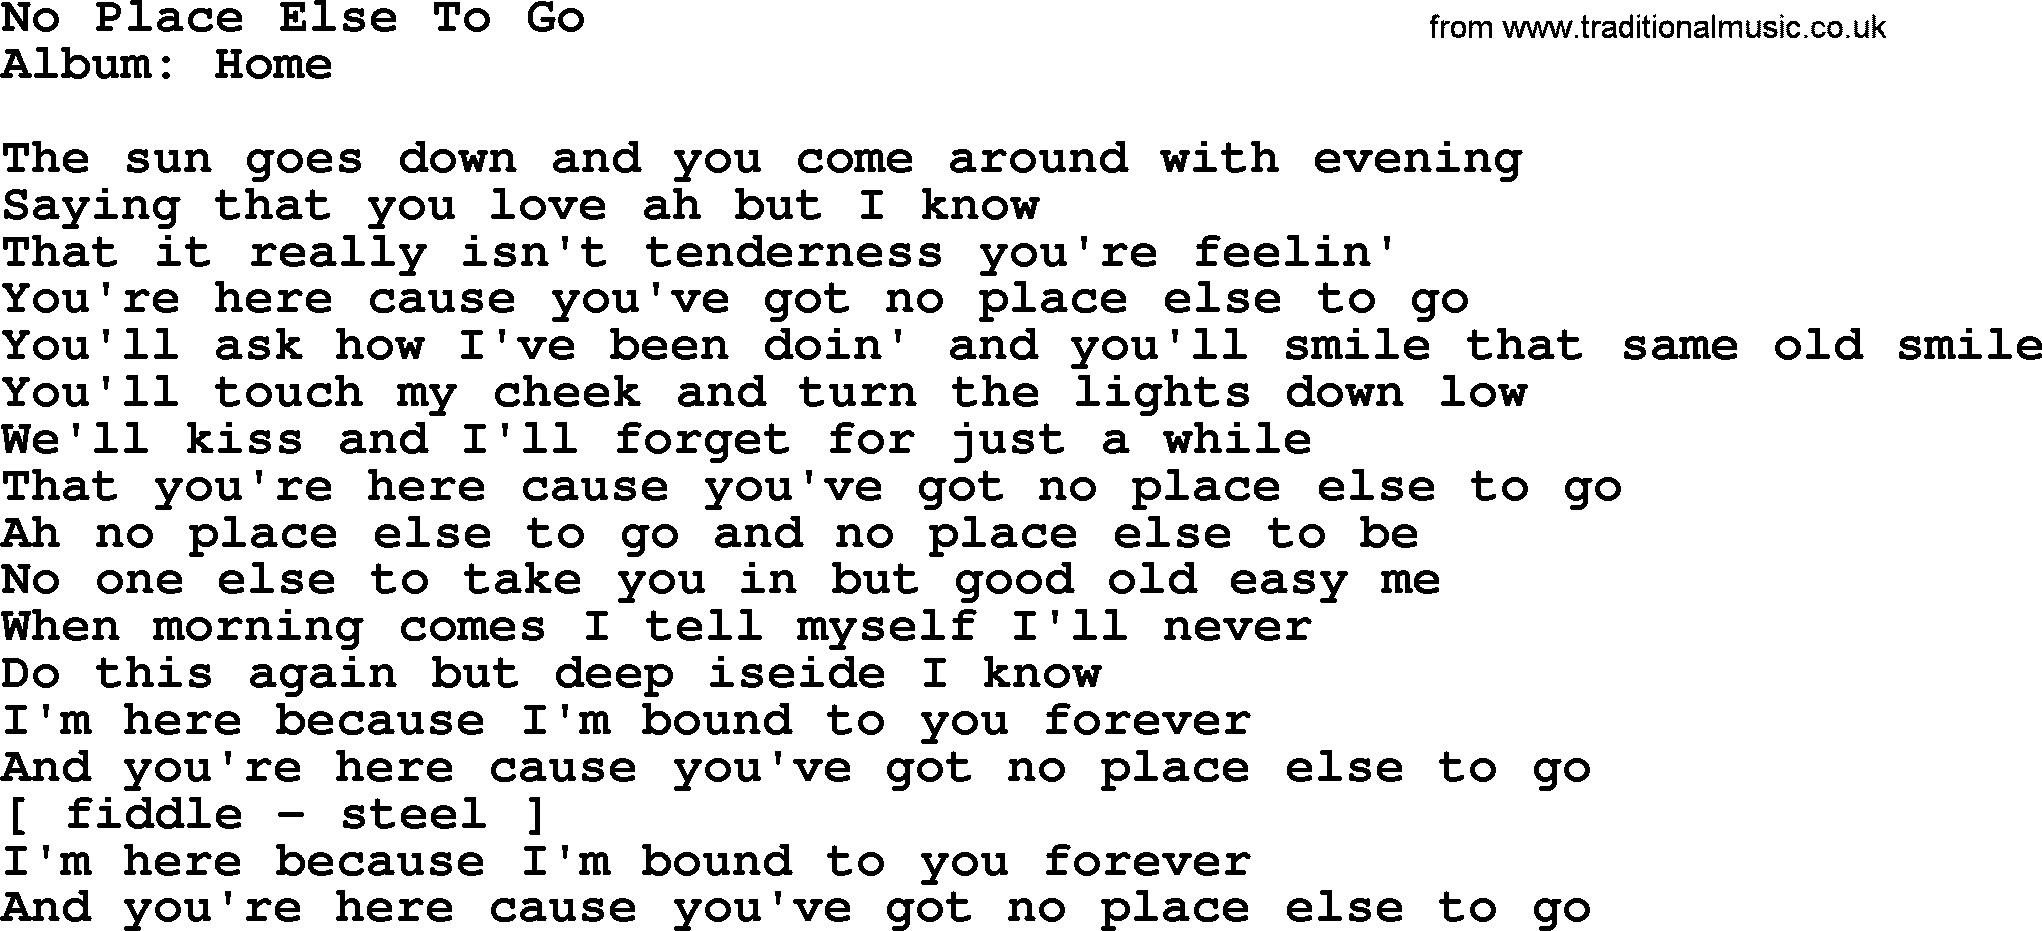 Loretta Lynn song: No Place Else To Go lyrics